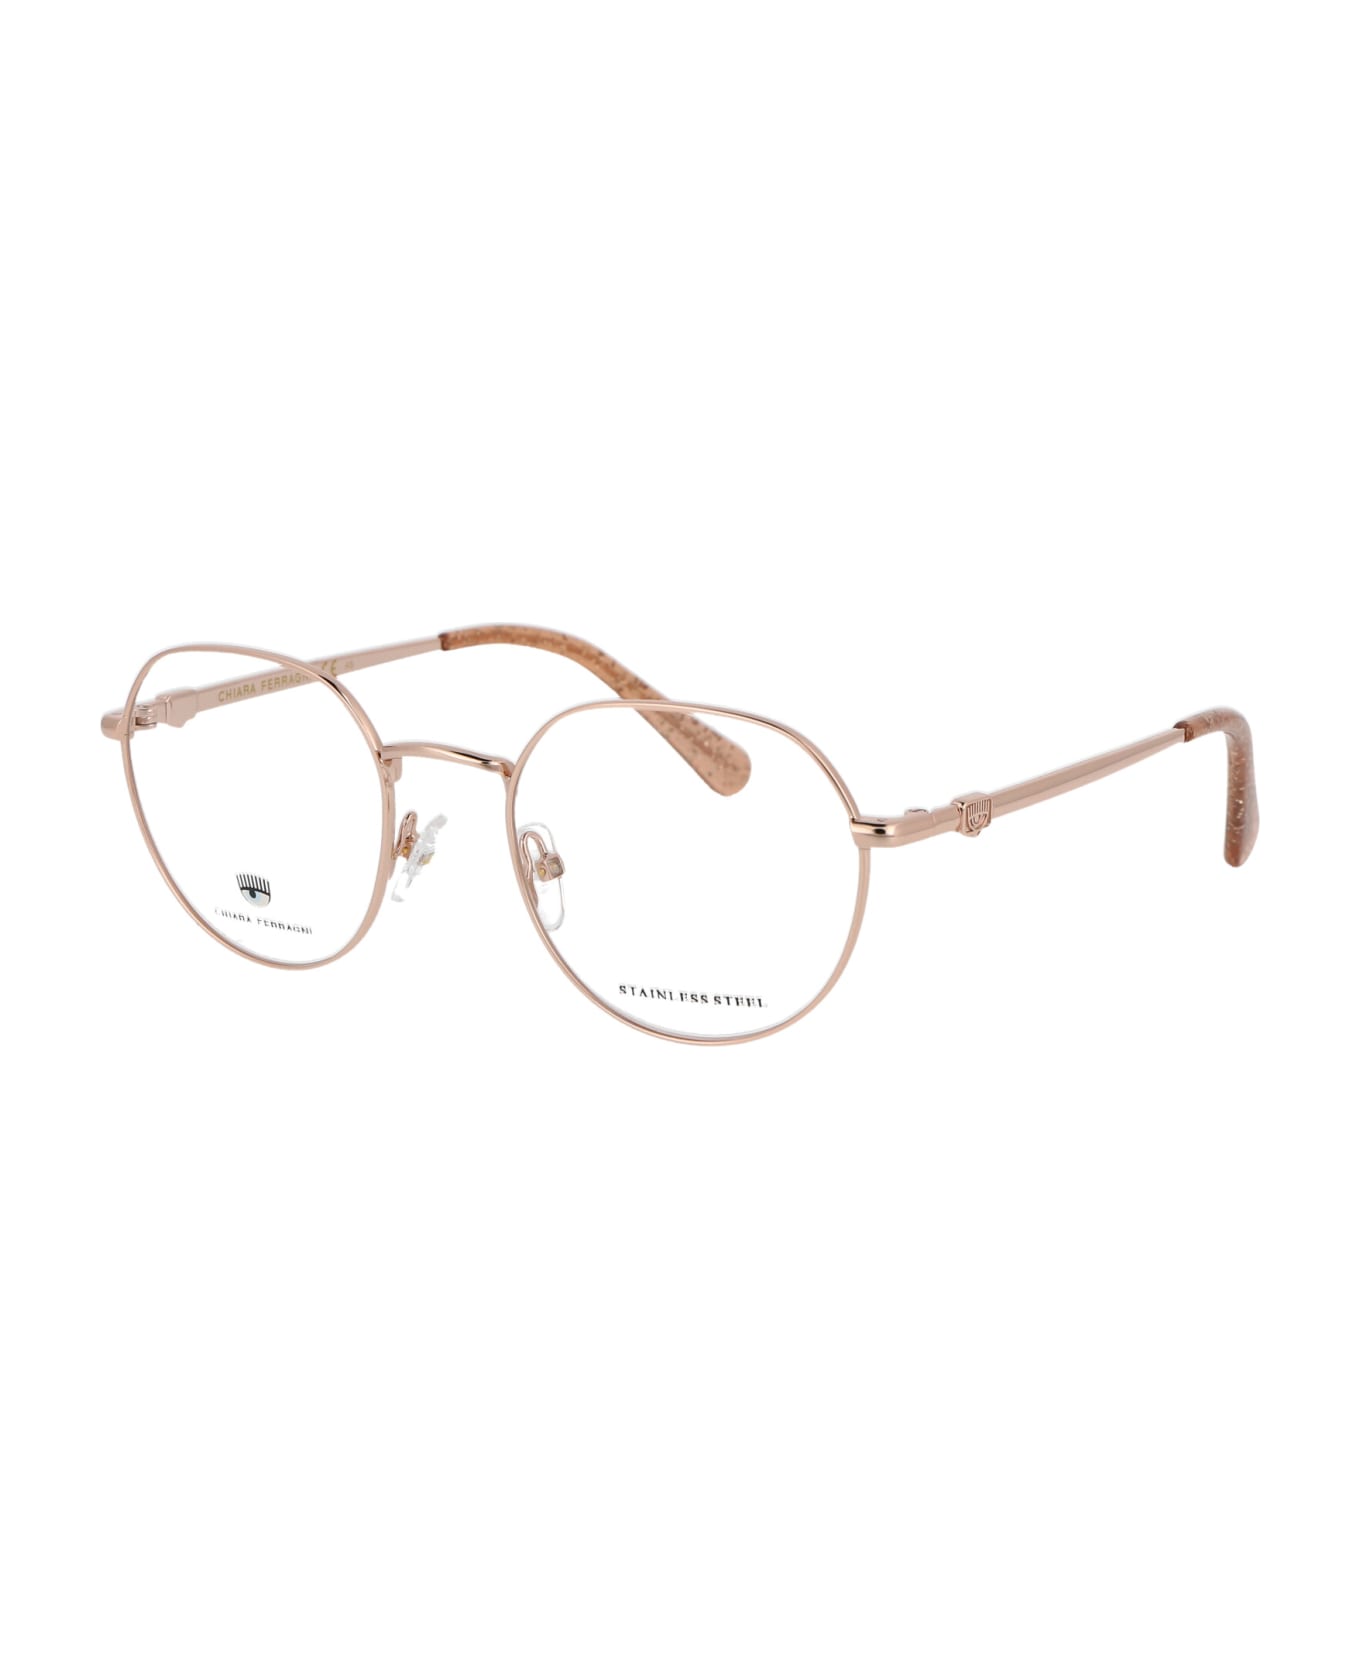 Chiara Ferragni Cf 1012 Glasses - DDB GOLD COPPER